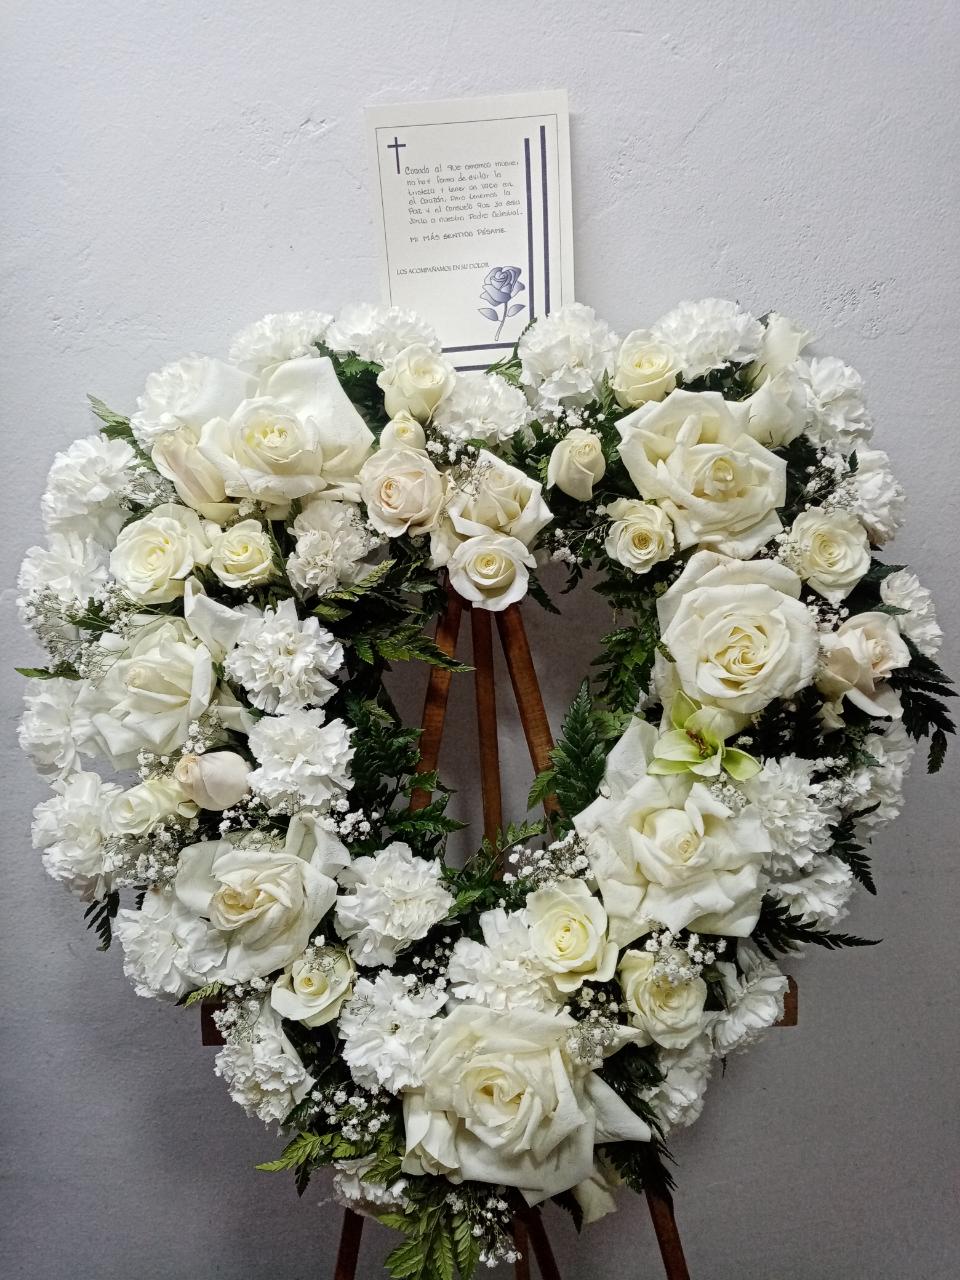 Corona fúnebre Suba - Colombiaflores.com.co